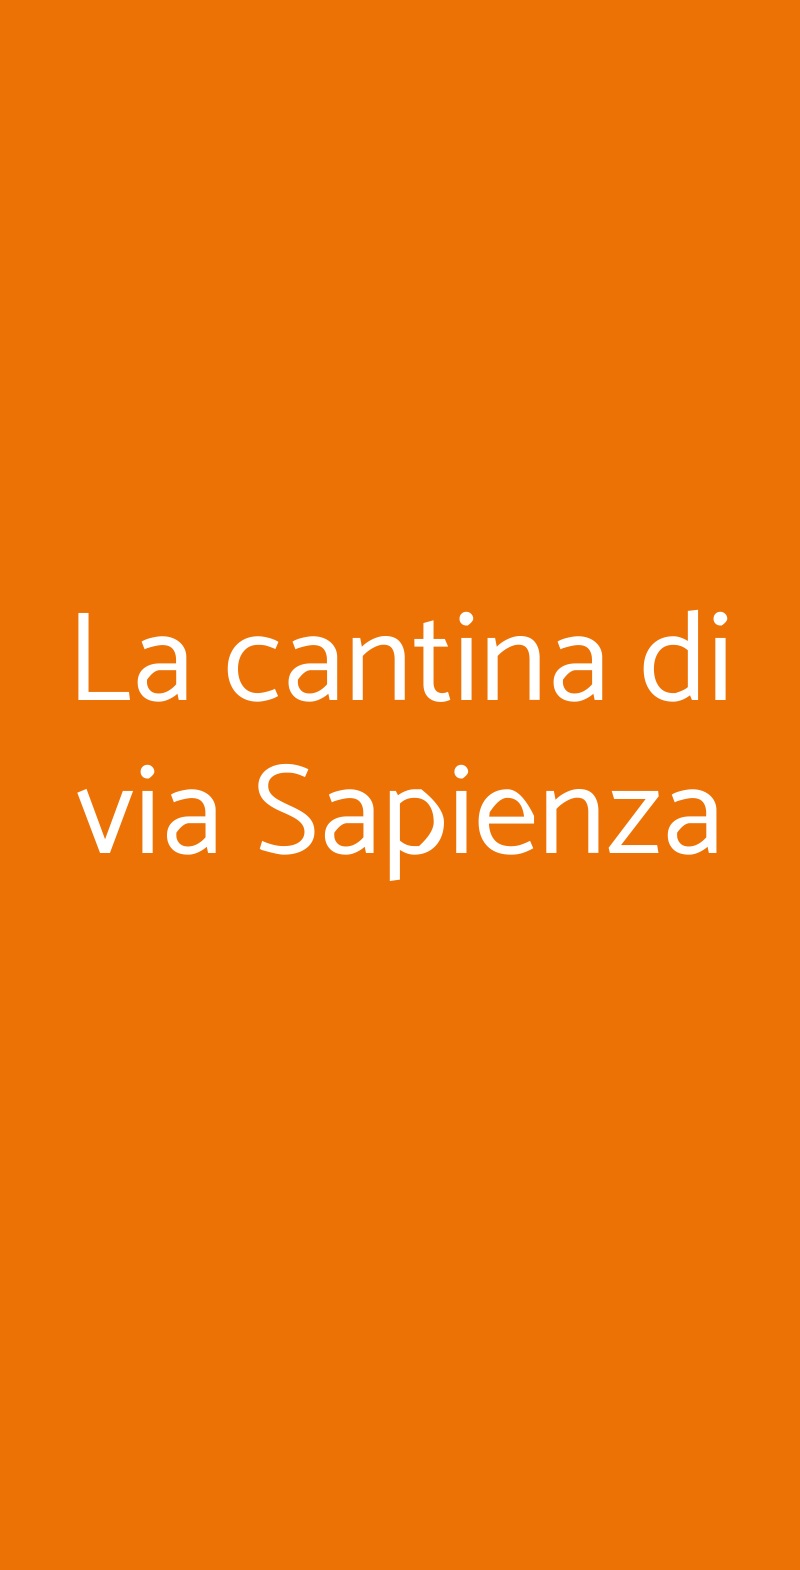 La cantina di via Sapienza Napoli menù 1 pagina